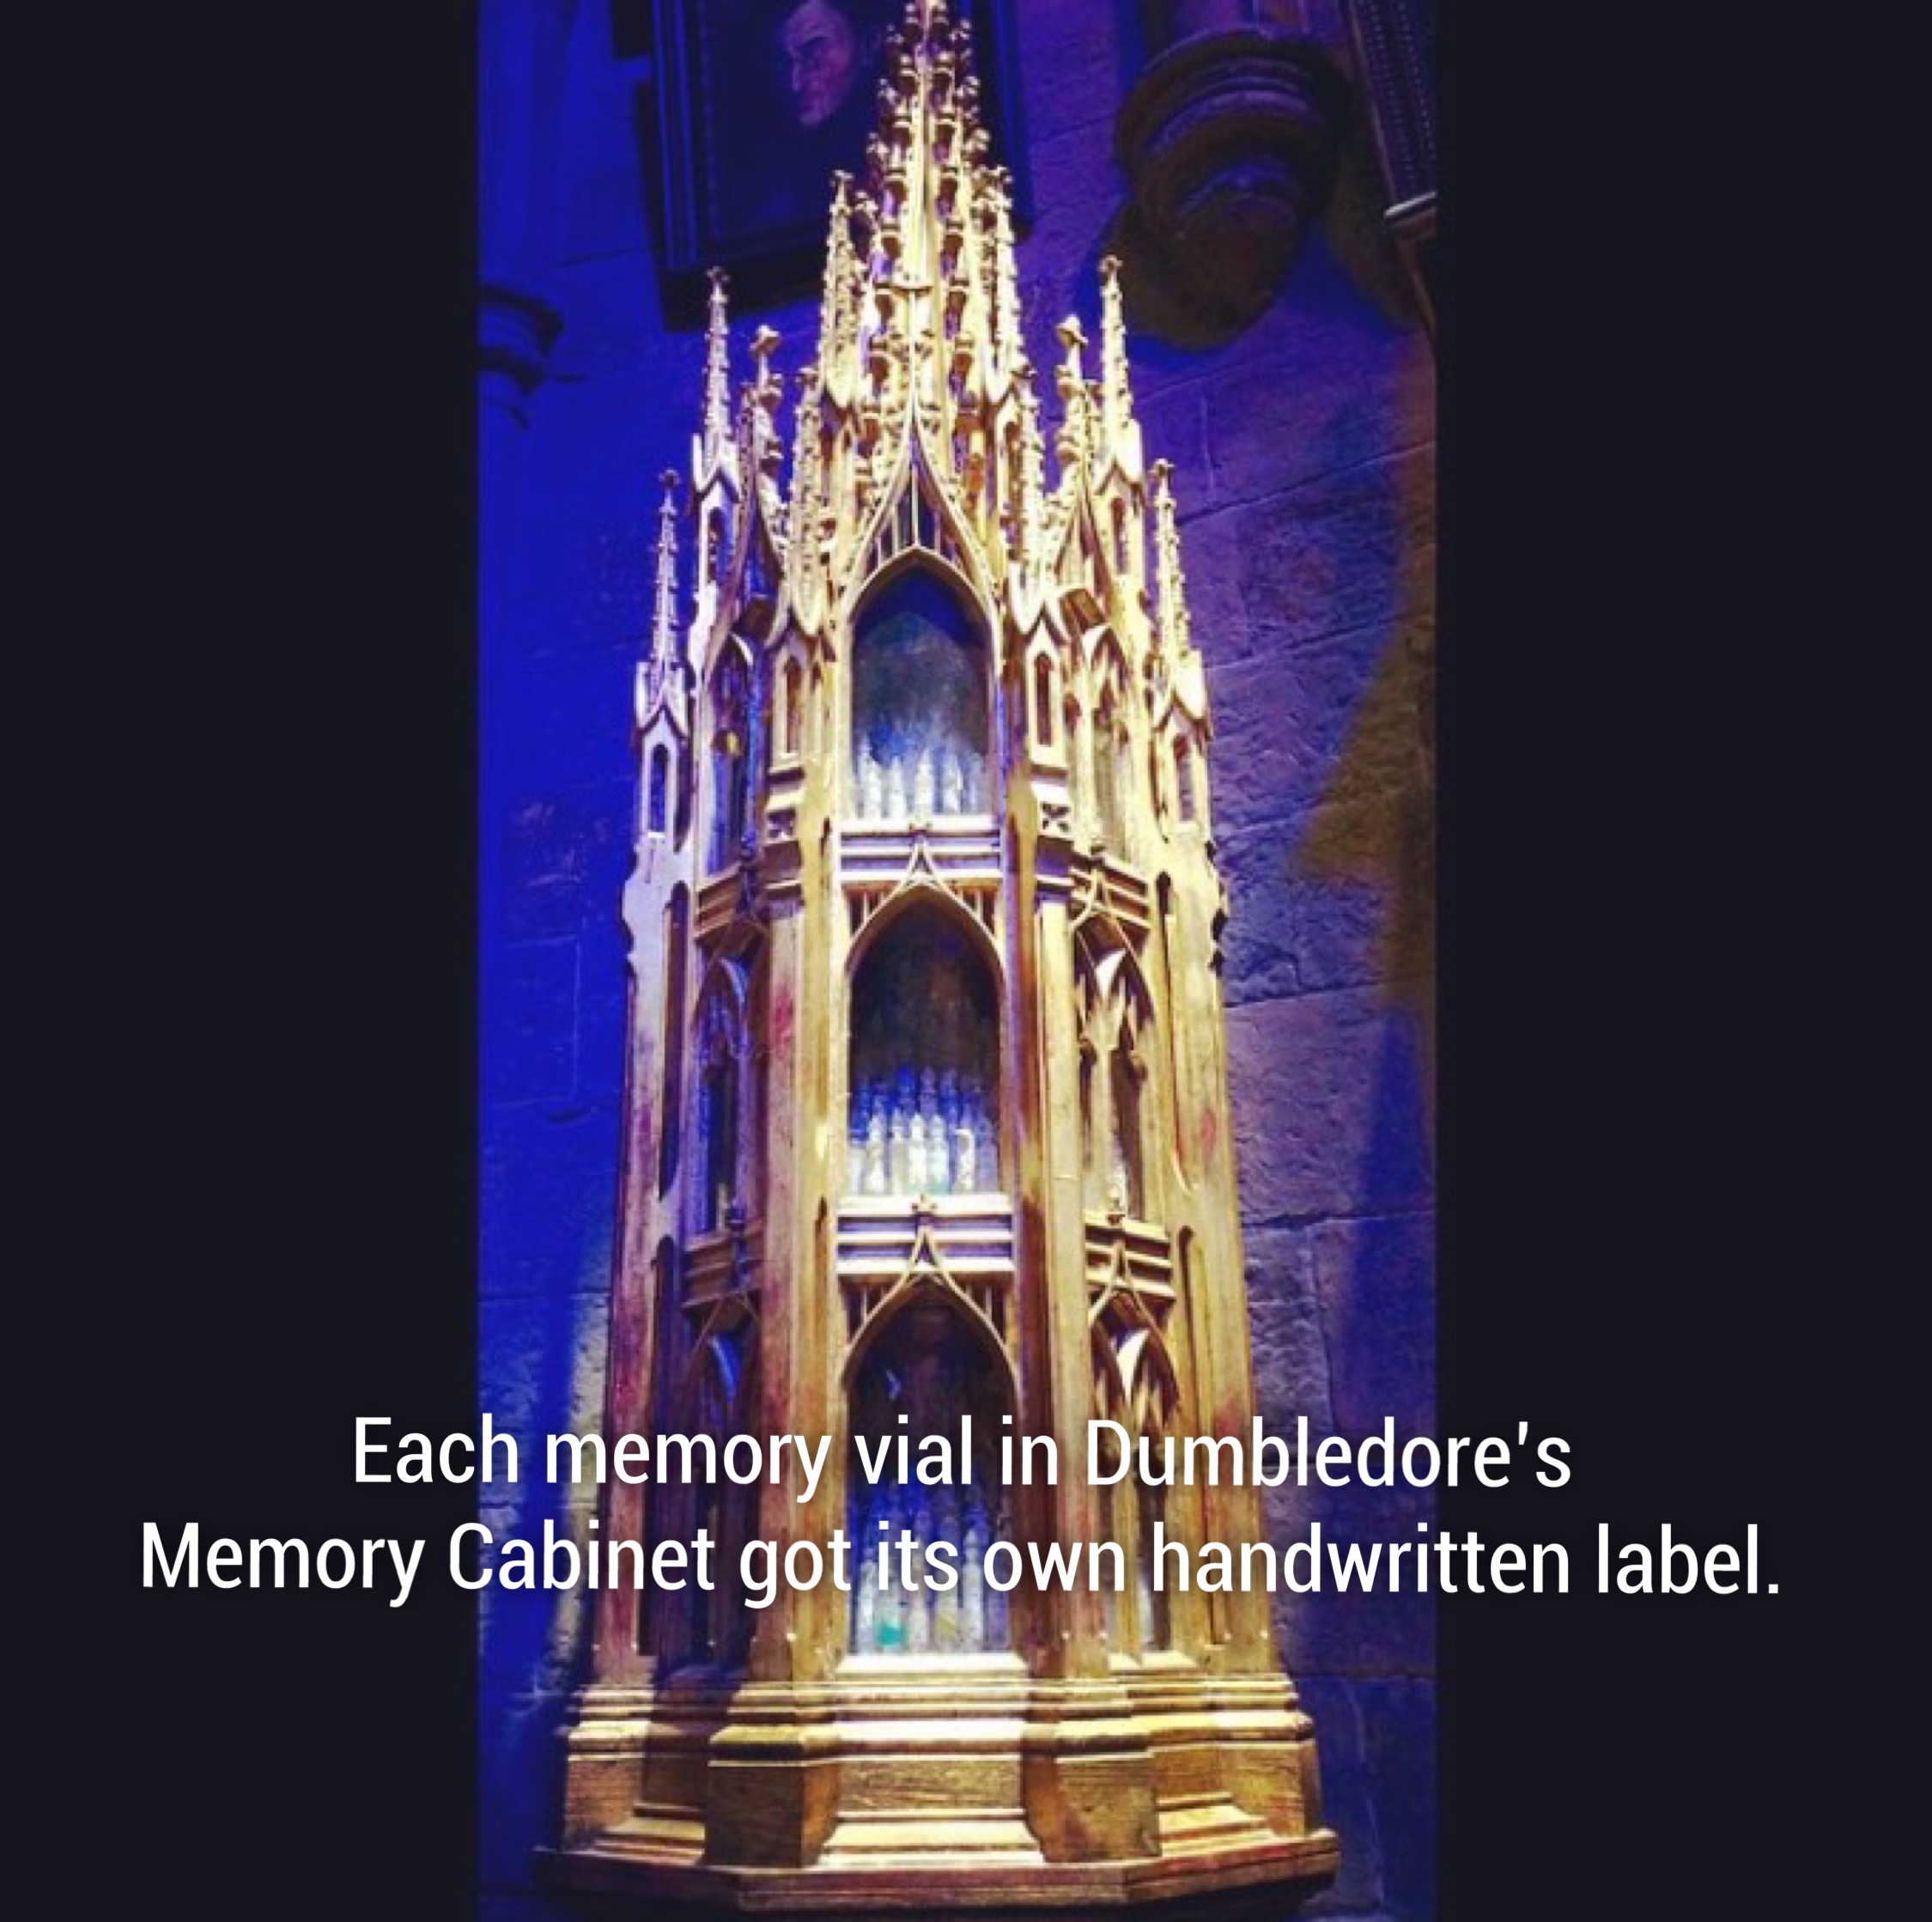 landmark - Each memory vial in Dumbledore's Memory Cabinet got its own handwritten label.